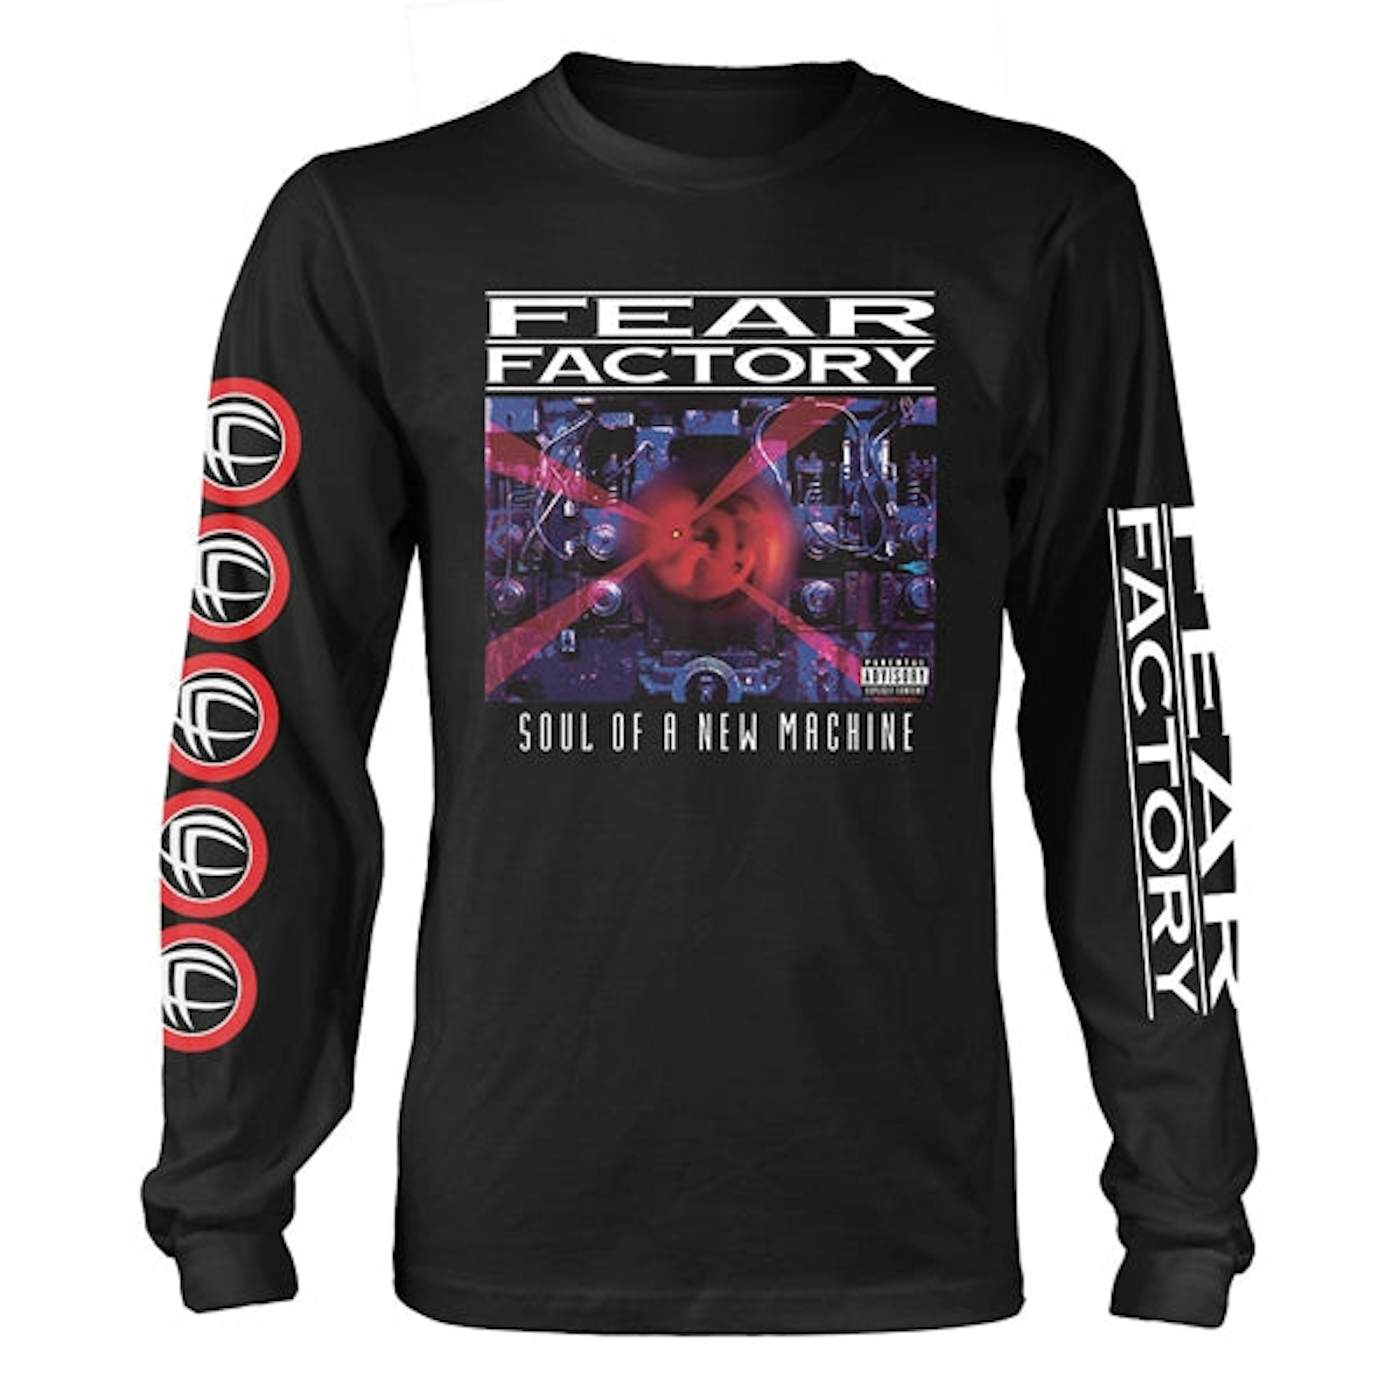 Fear Factory Long Sleeve T Shirt - Soul Of A New Machine